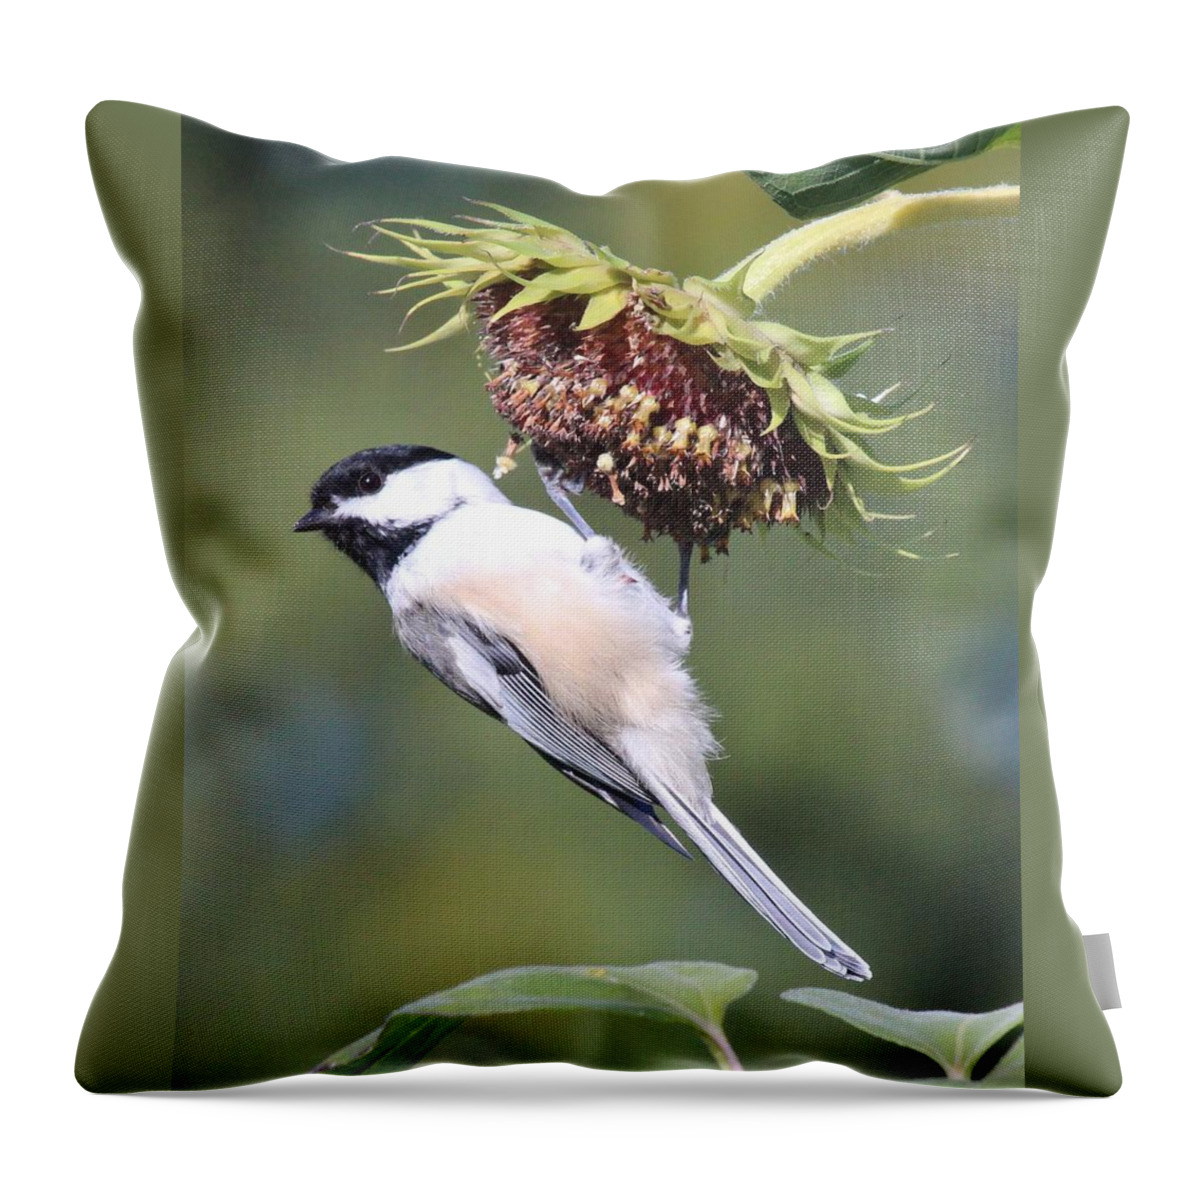 Chickadee Throw Pillow featuring the photograph Chickadee on Sunflower by Lucinda VanVleck